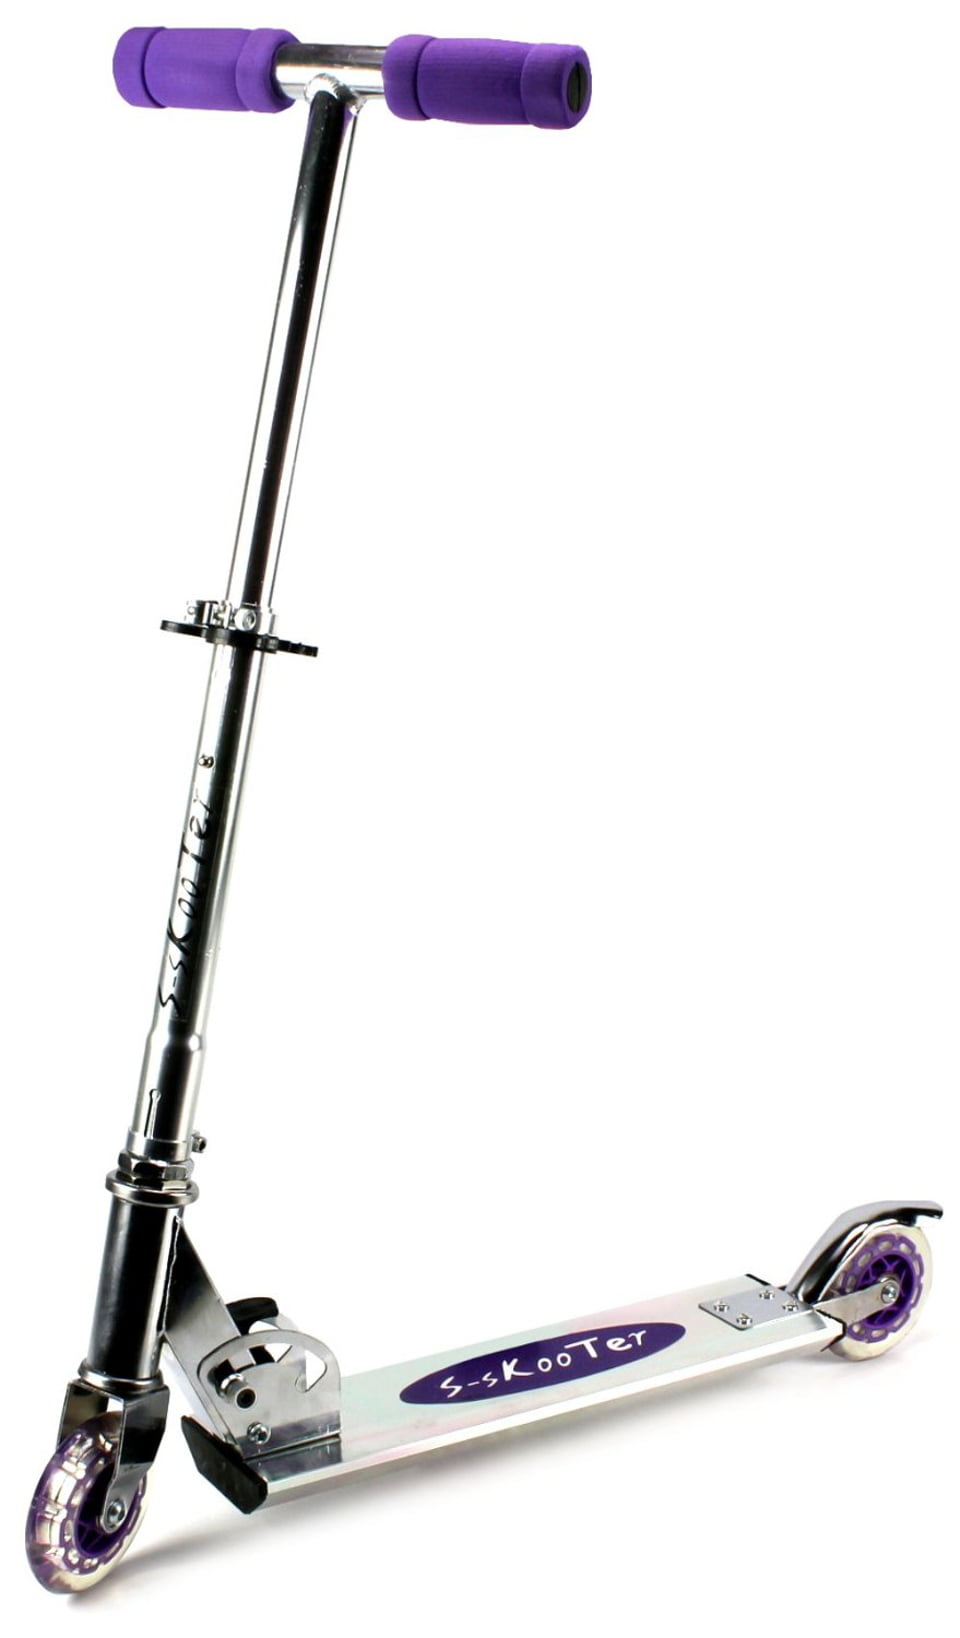 S-Skooter Children's Two Wheeled Metal Toy Kick Scooter w/ Adjustable Handlebar Height, Rear Fender (Purple) - Walmart.com